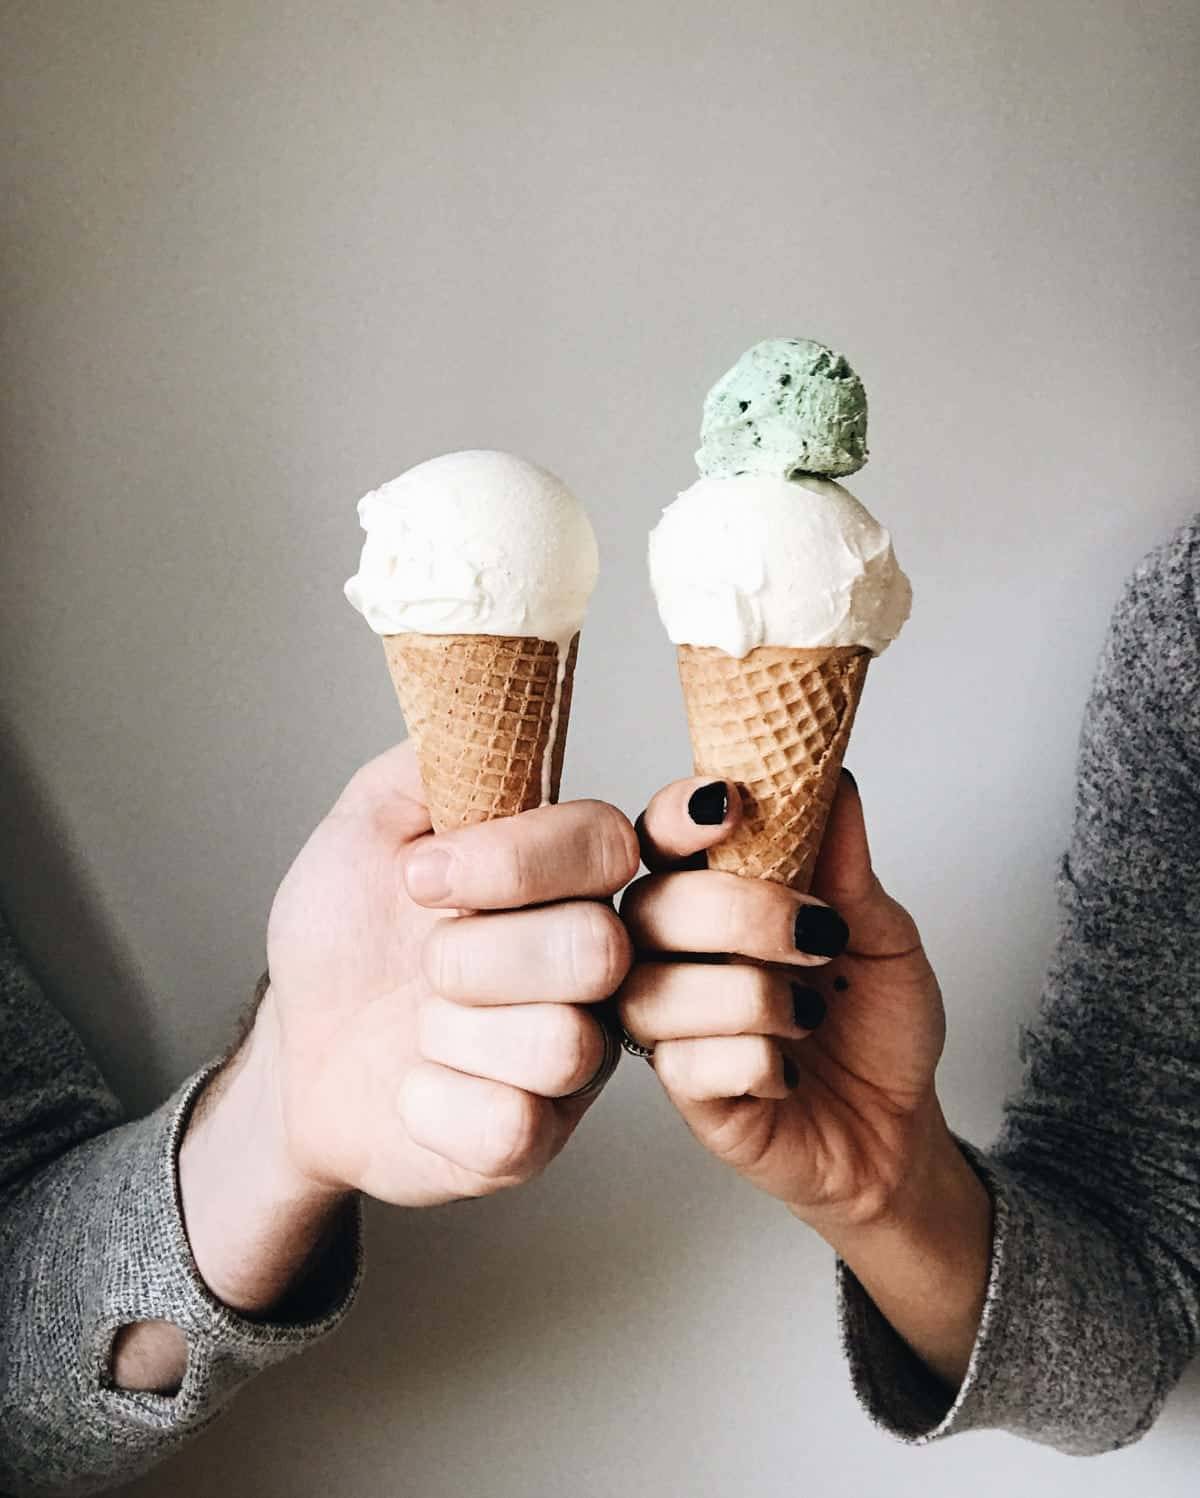 Two hands holding ice cream cones.